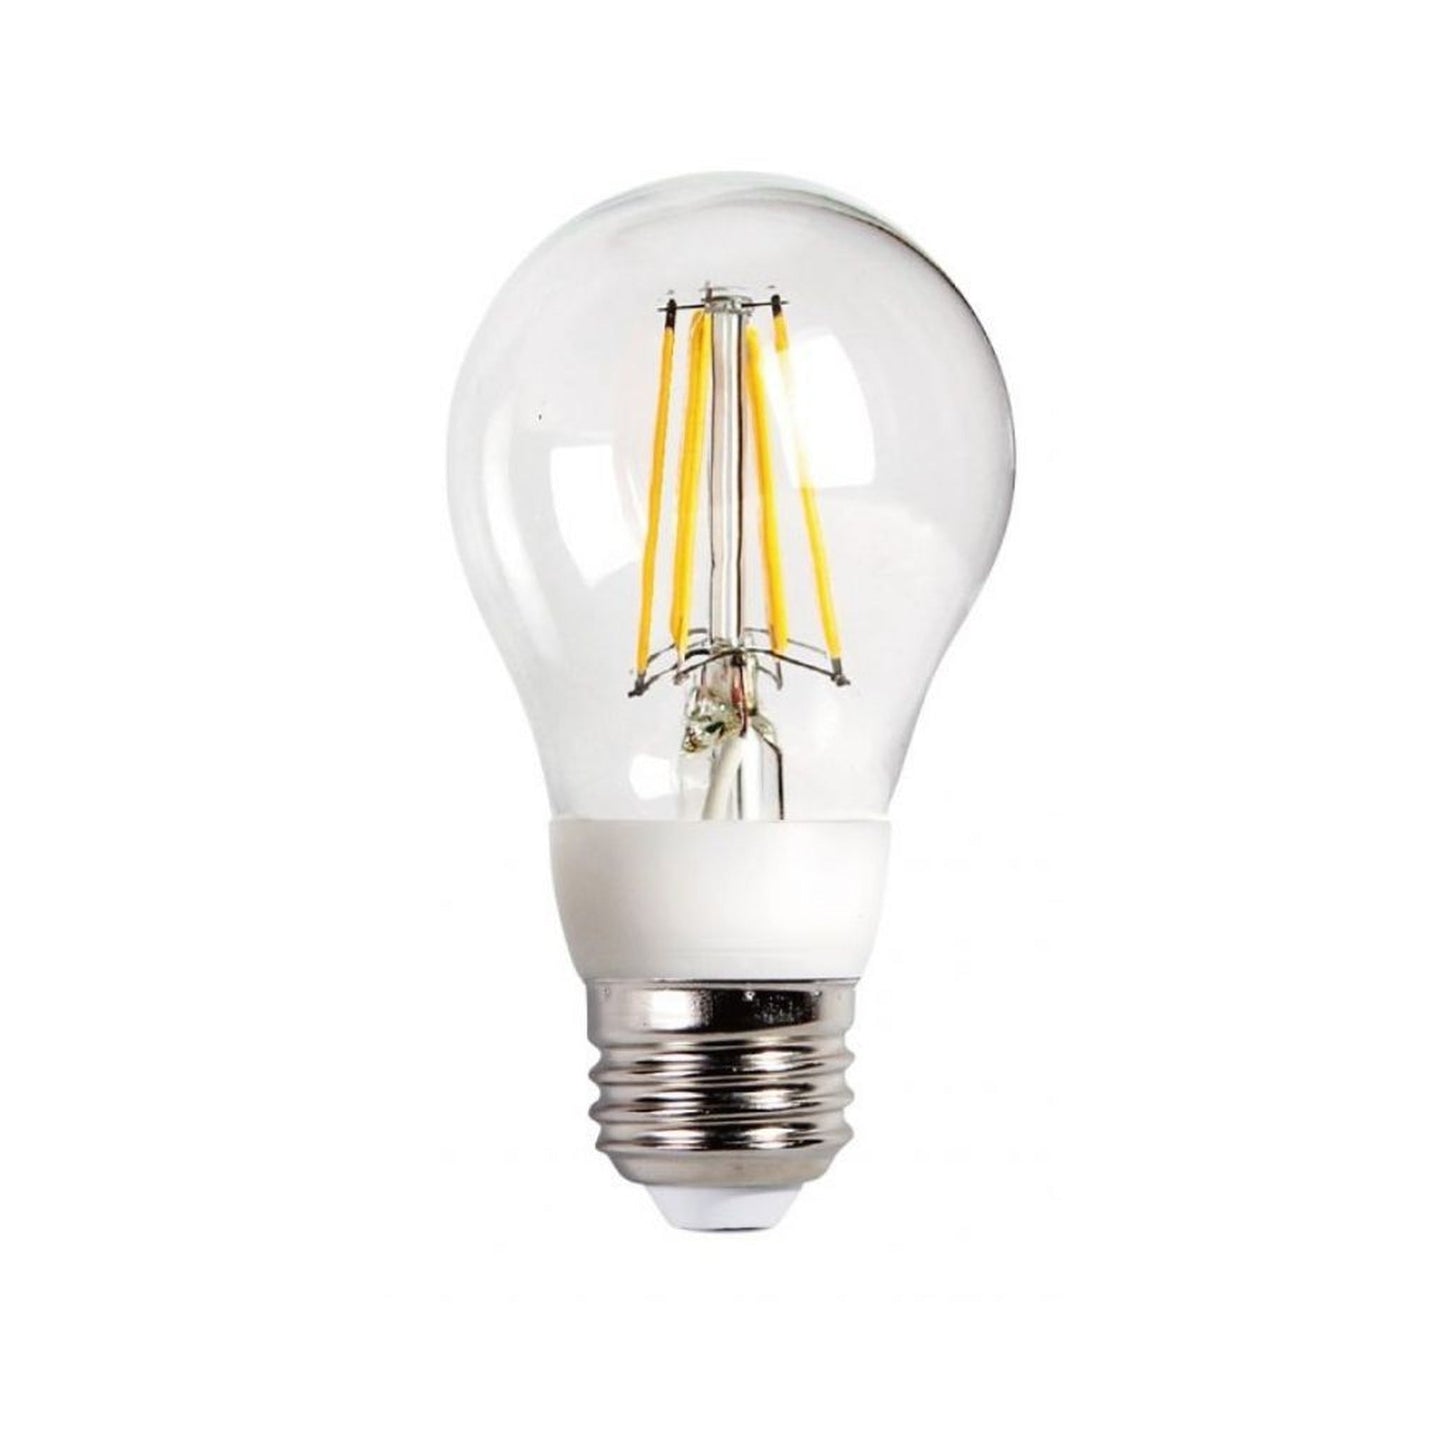 Craftmade 7-Watt A19 Clear Finish, E26 Medium Base, 4.3" M.O.L., 2700K Warm White LED Light Bulb